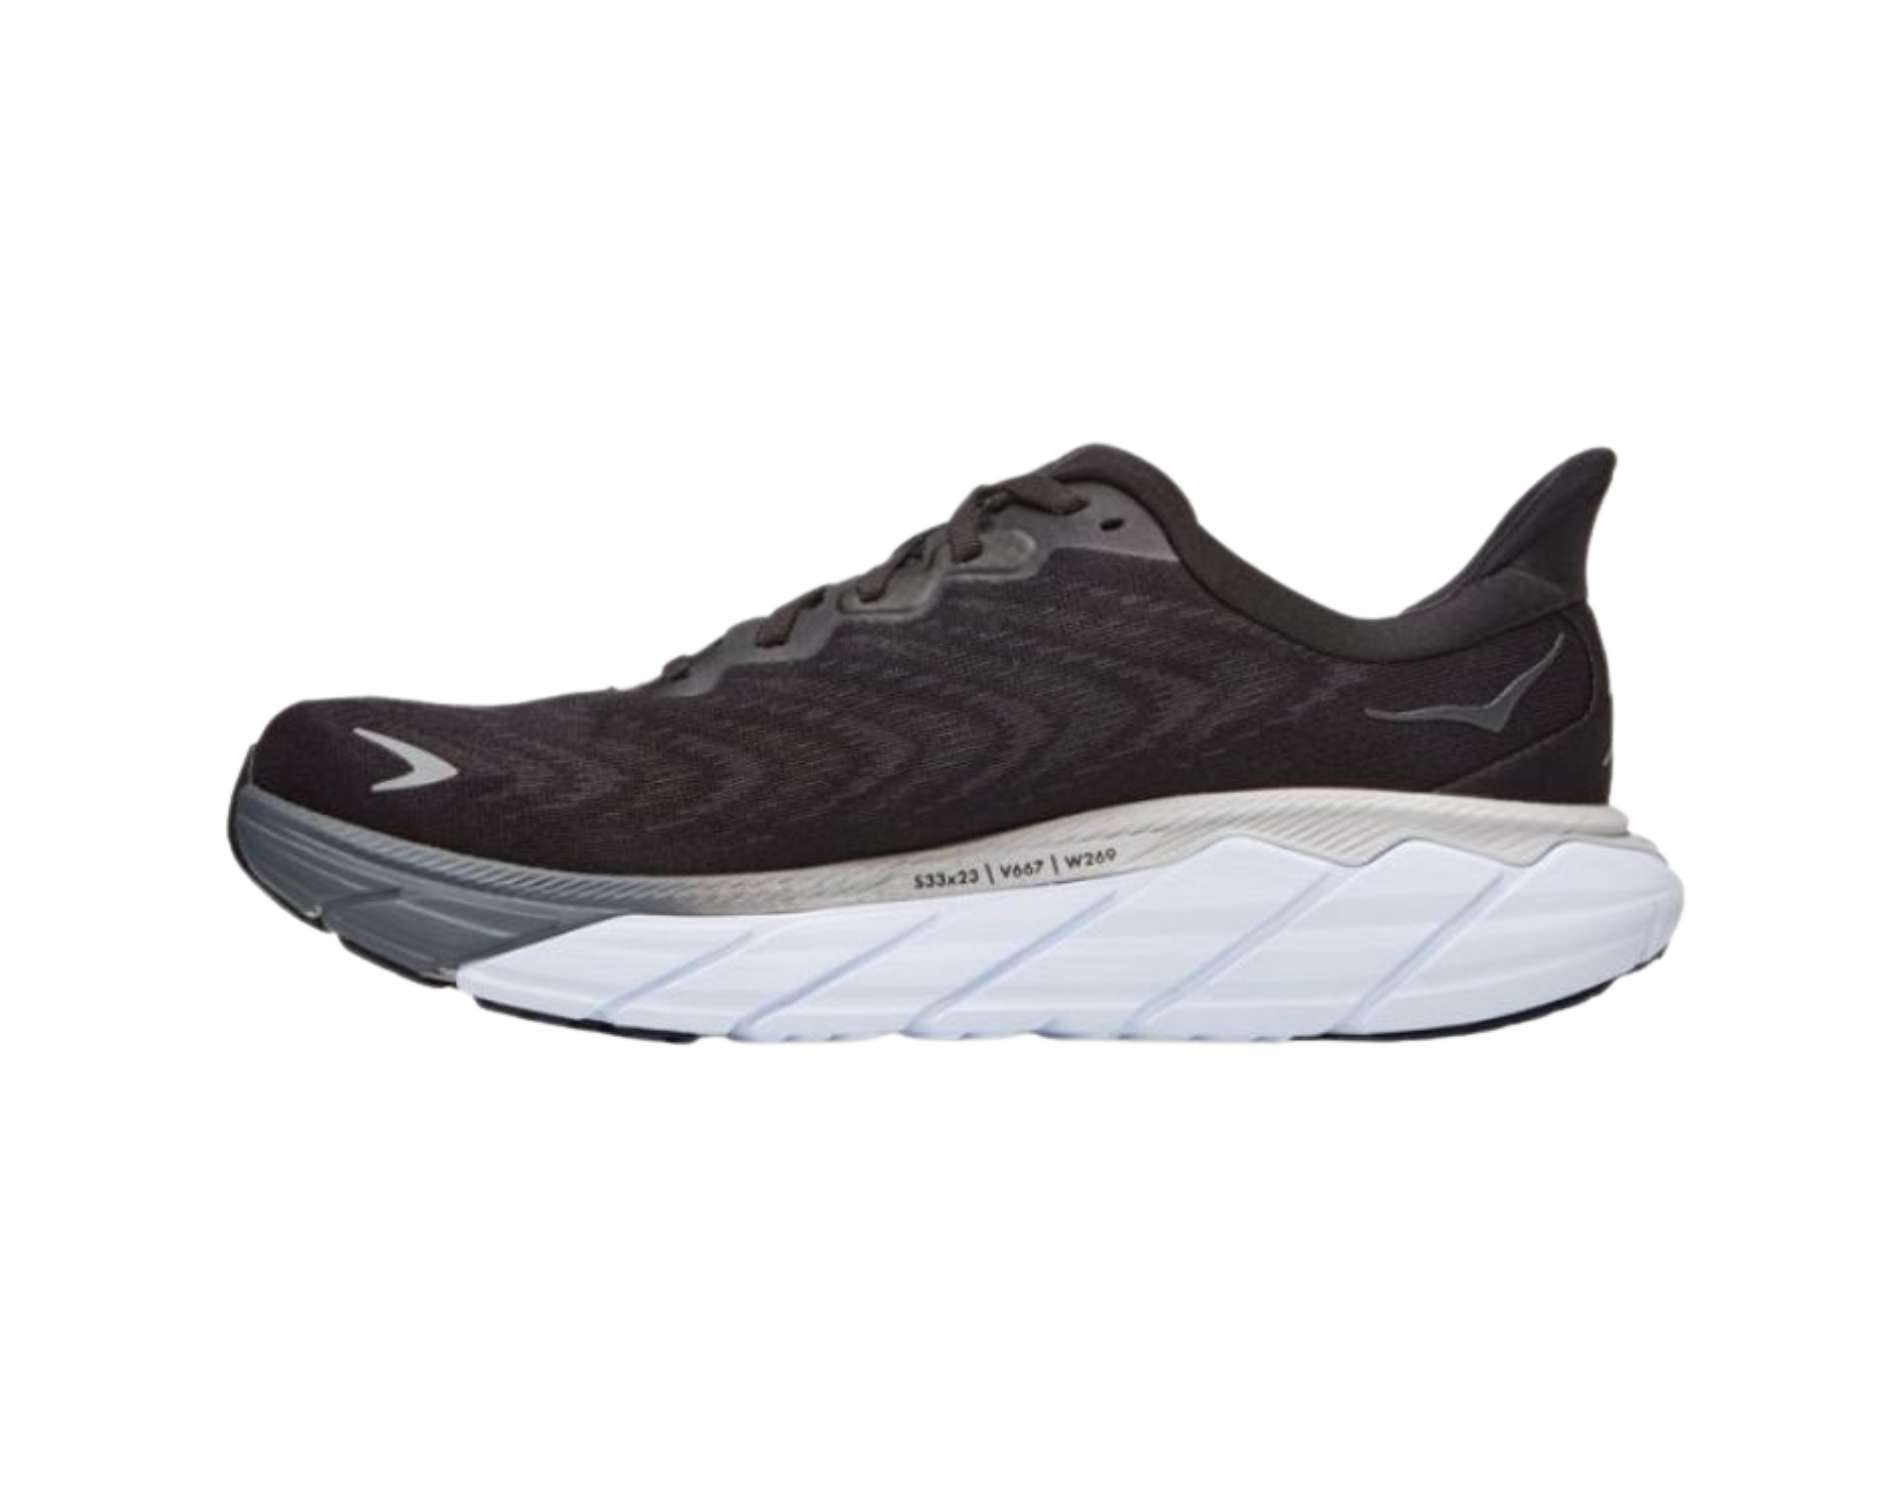 Hoka Arahi 6 mens running shoe in wide width in black and white colour